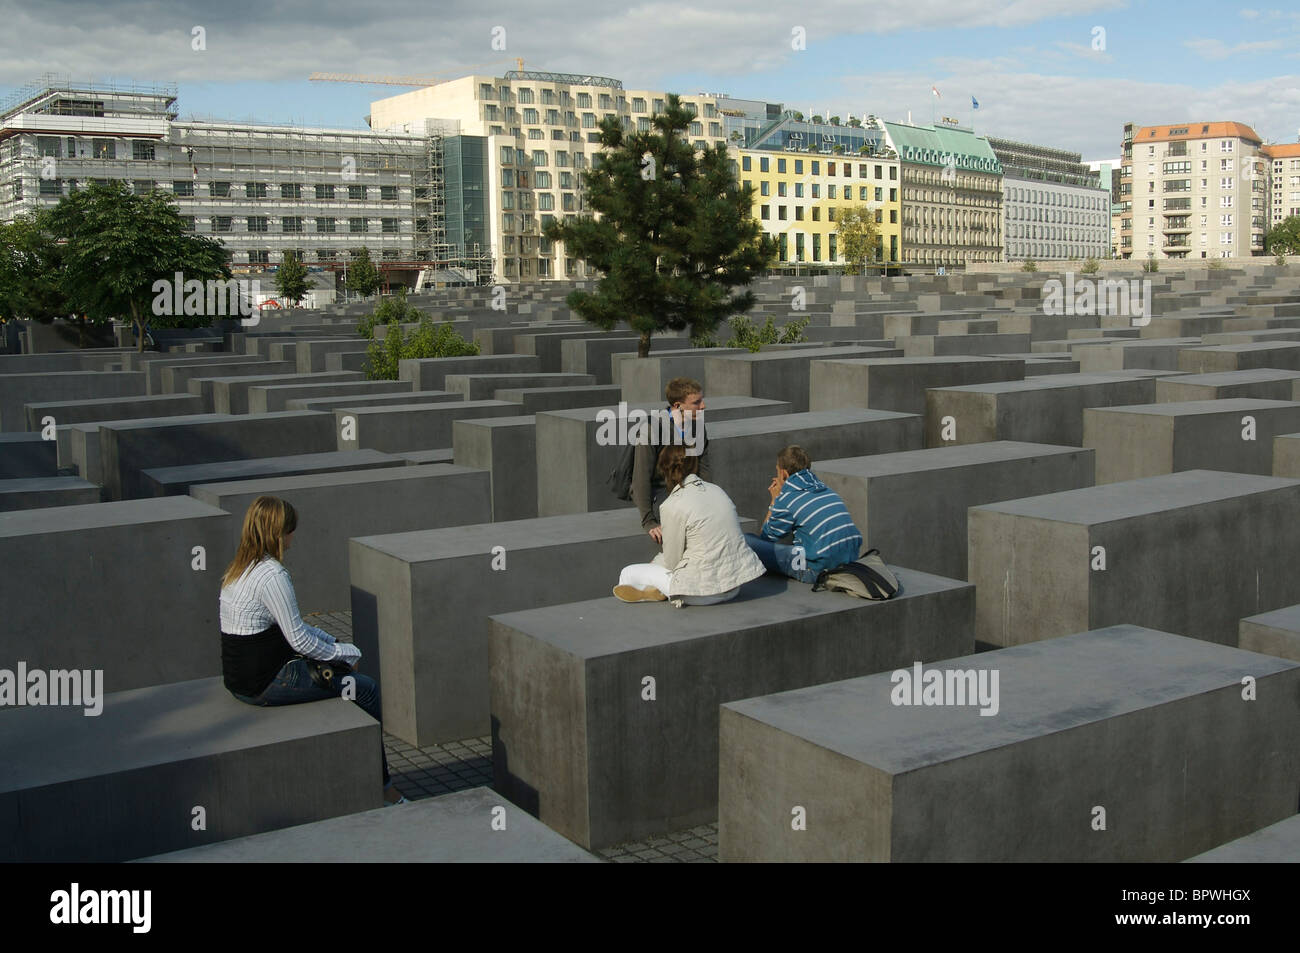 Denkmal die Ermordeten Juden Europa, Mémorial aux Juifs assassinés d'Europe Banque D'Images